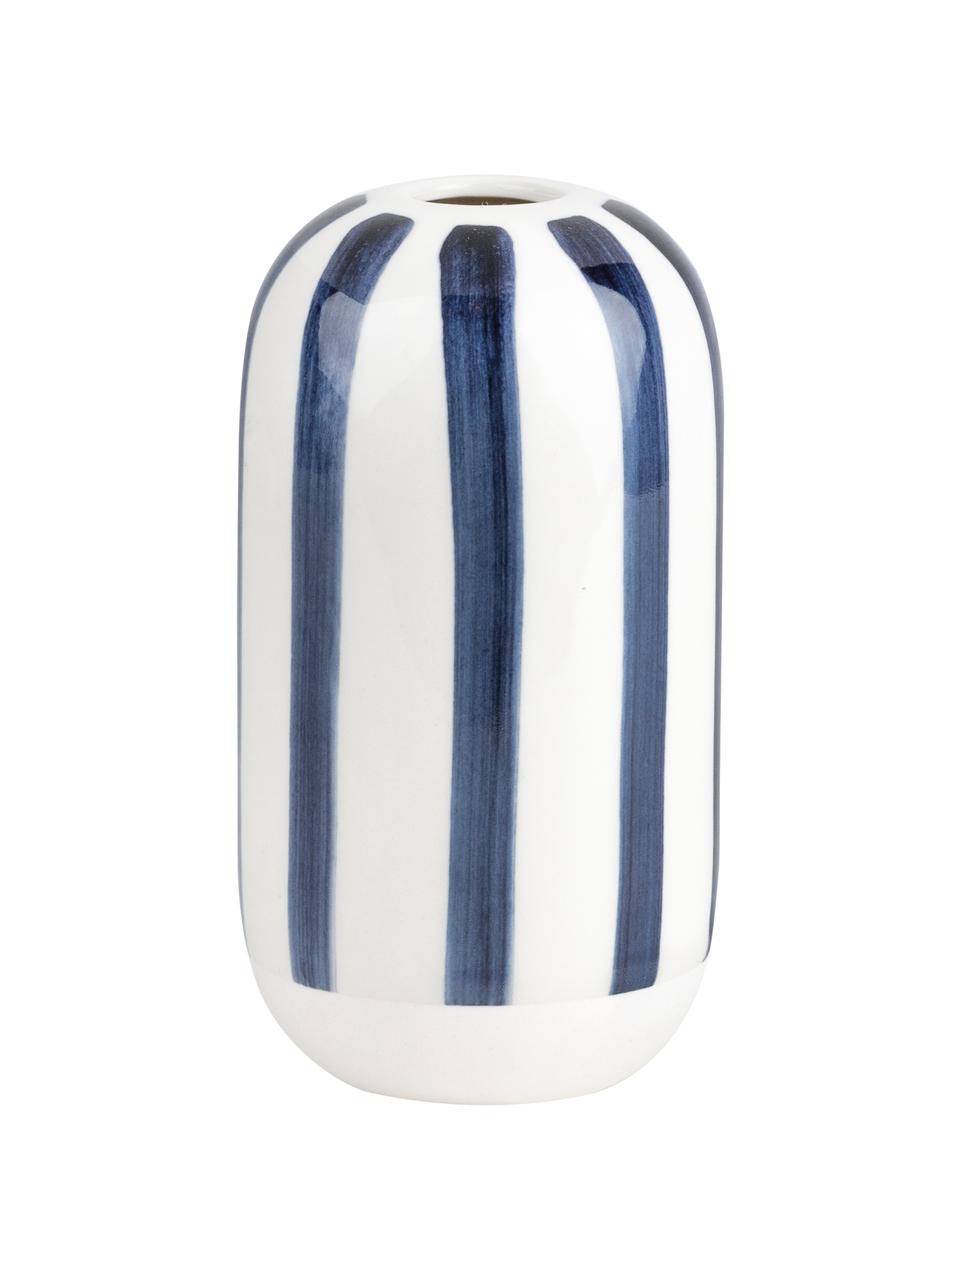 Kameninová váza Contrast, Kamenina, Bílá, tmavě modrá, Ø 7 cm, V 13 cm